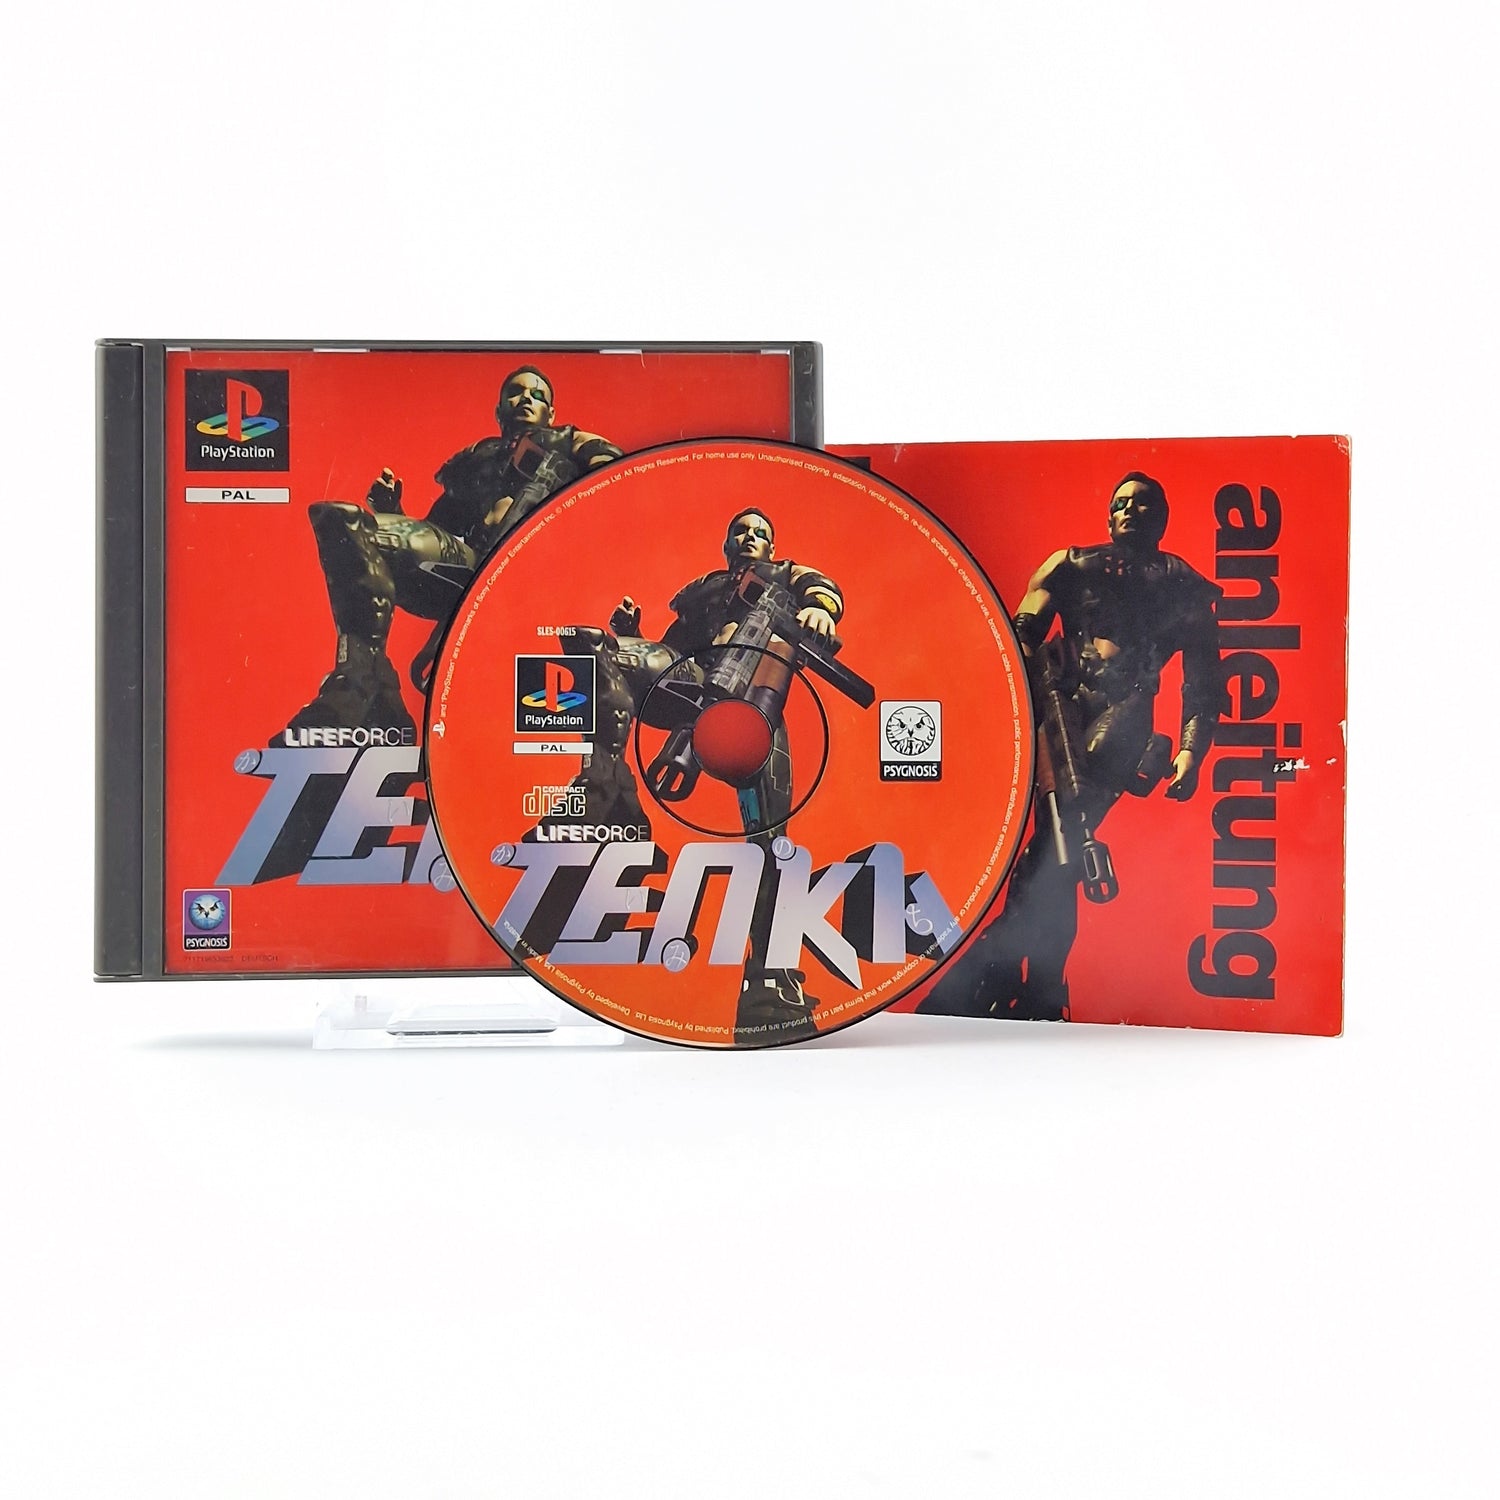 Playstation 1 Spiel : Lifeforce Tenka - OVP Anleitung CD / SONY PS1 PSX PAL